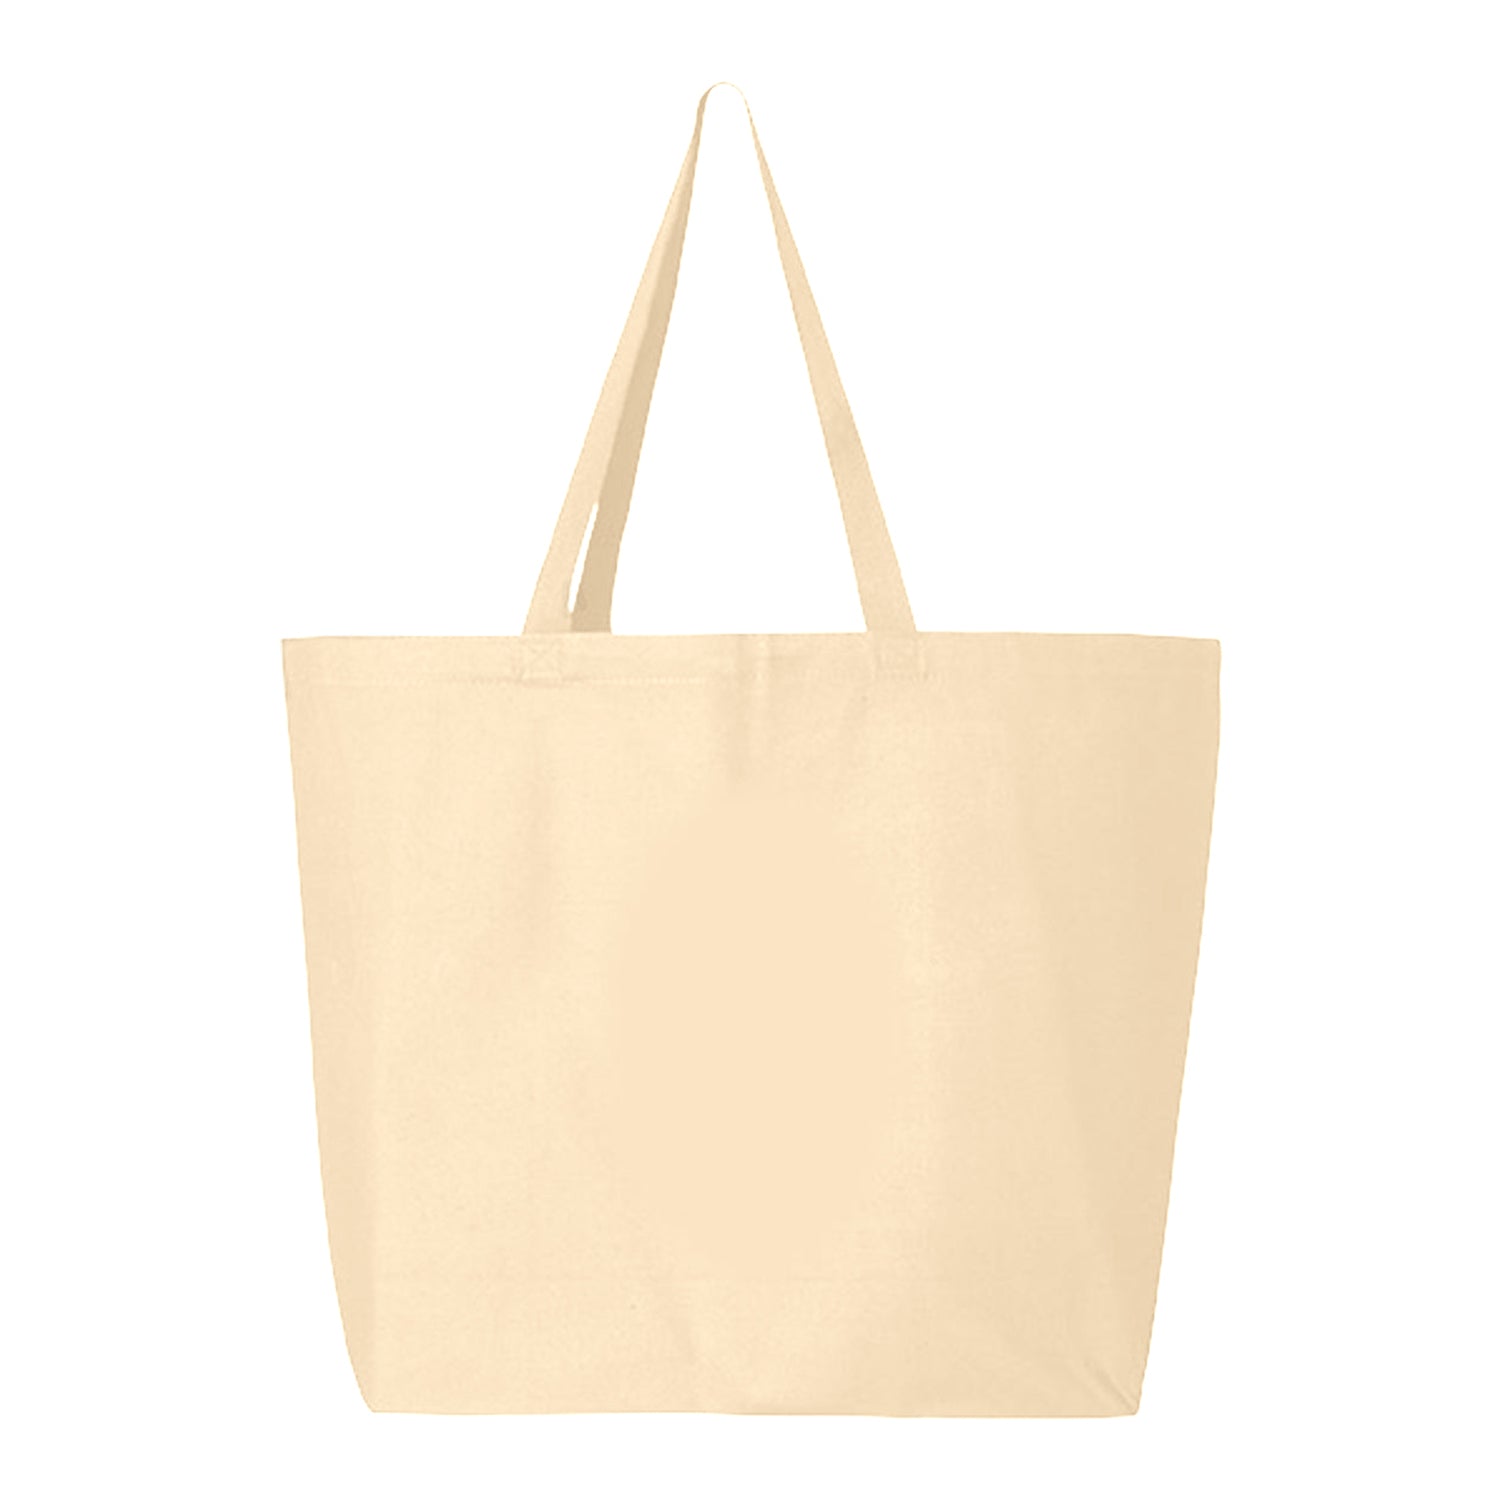 10 oz. Jumbo Heavy Canvas Tote Reusable Shopping Bag